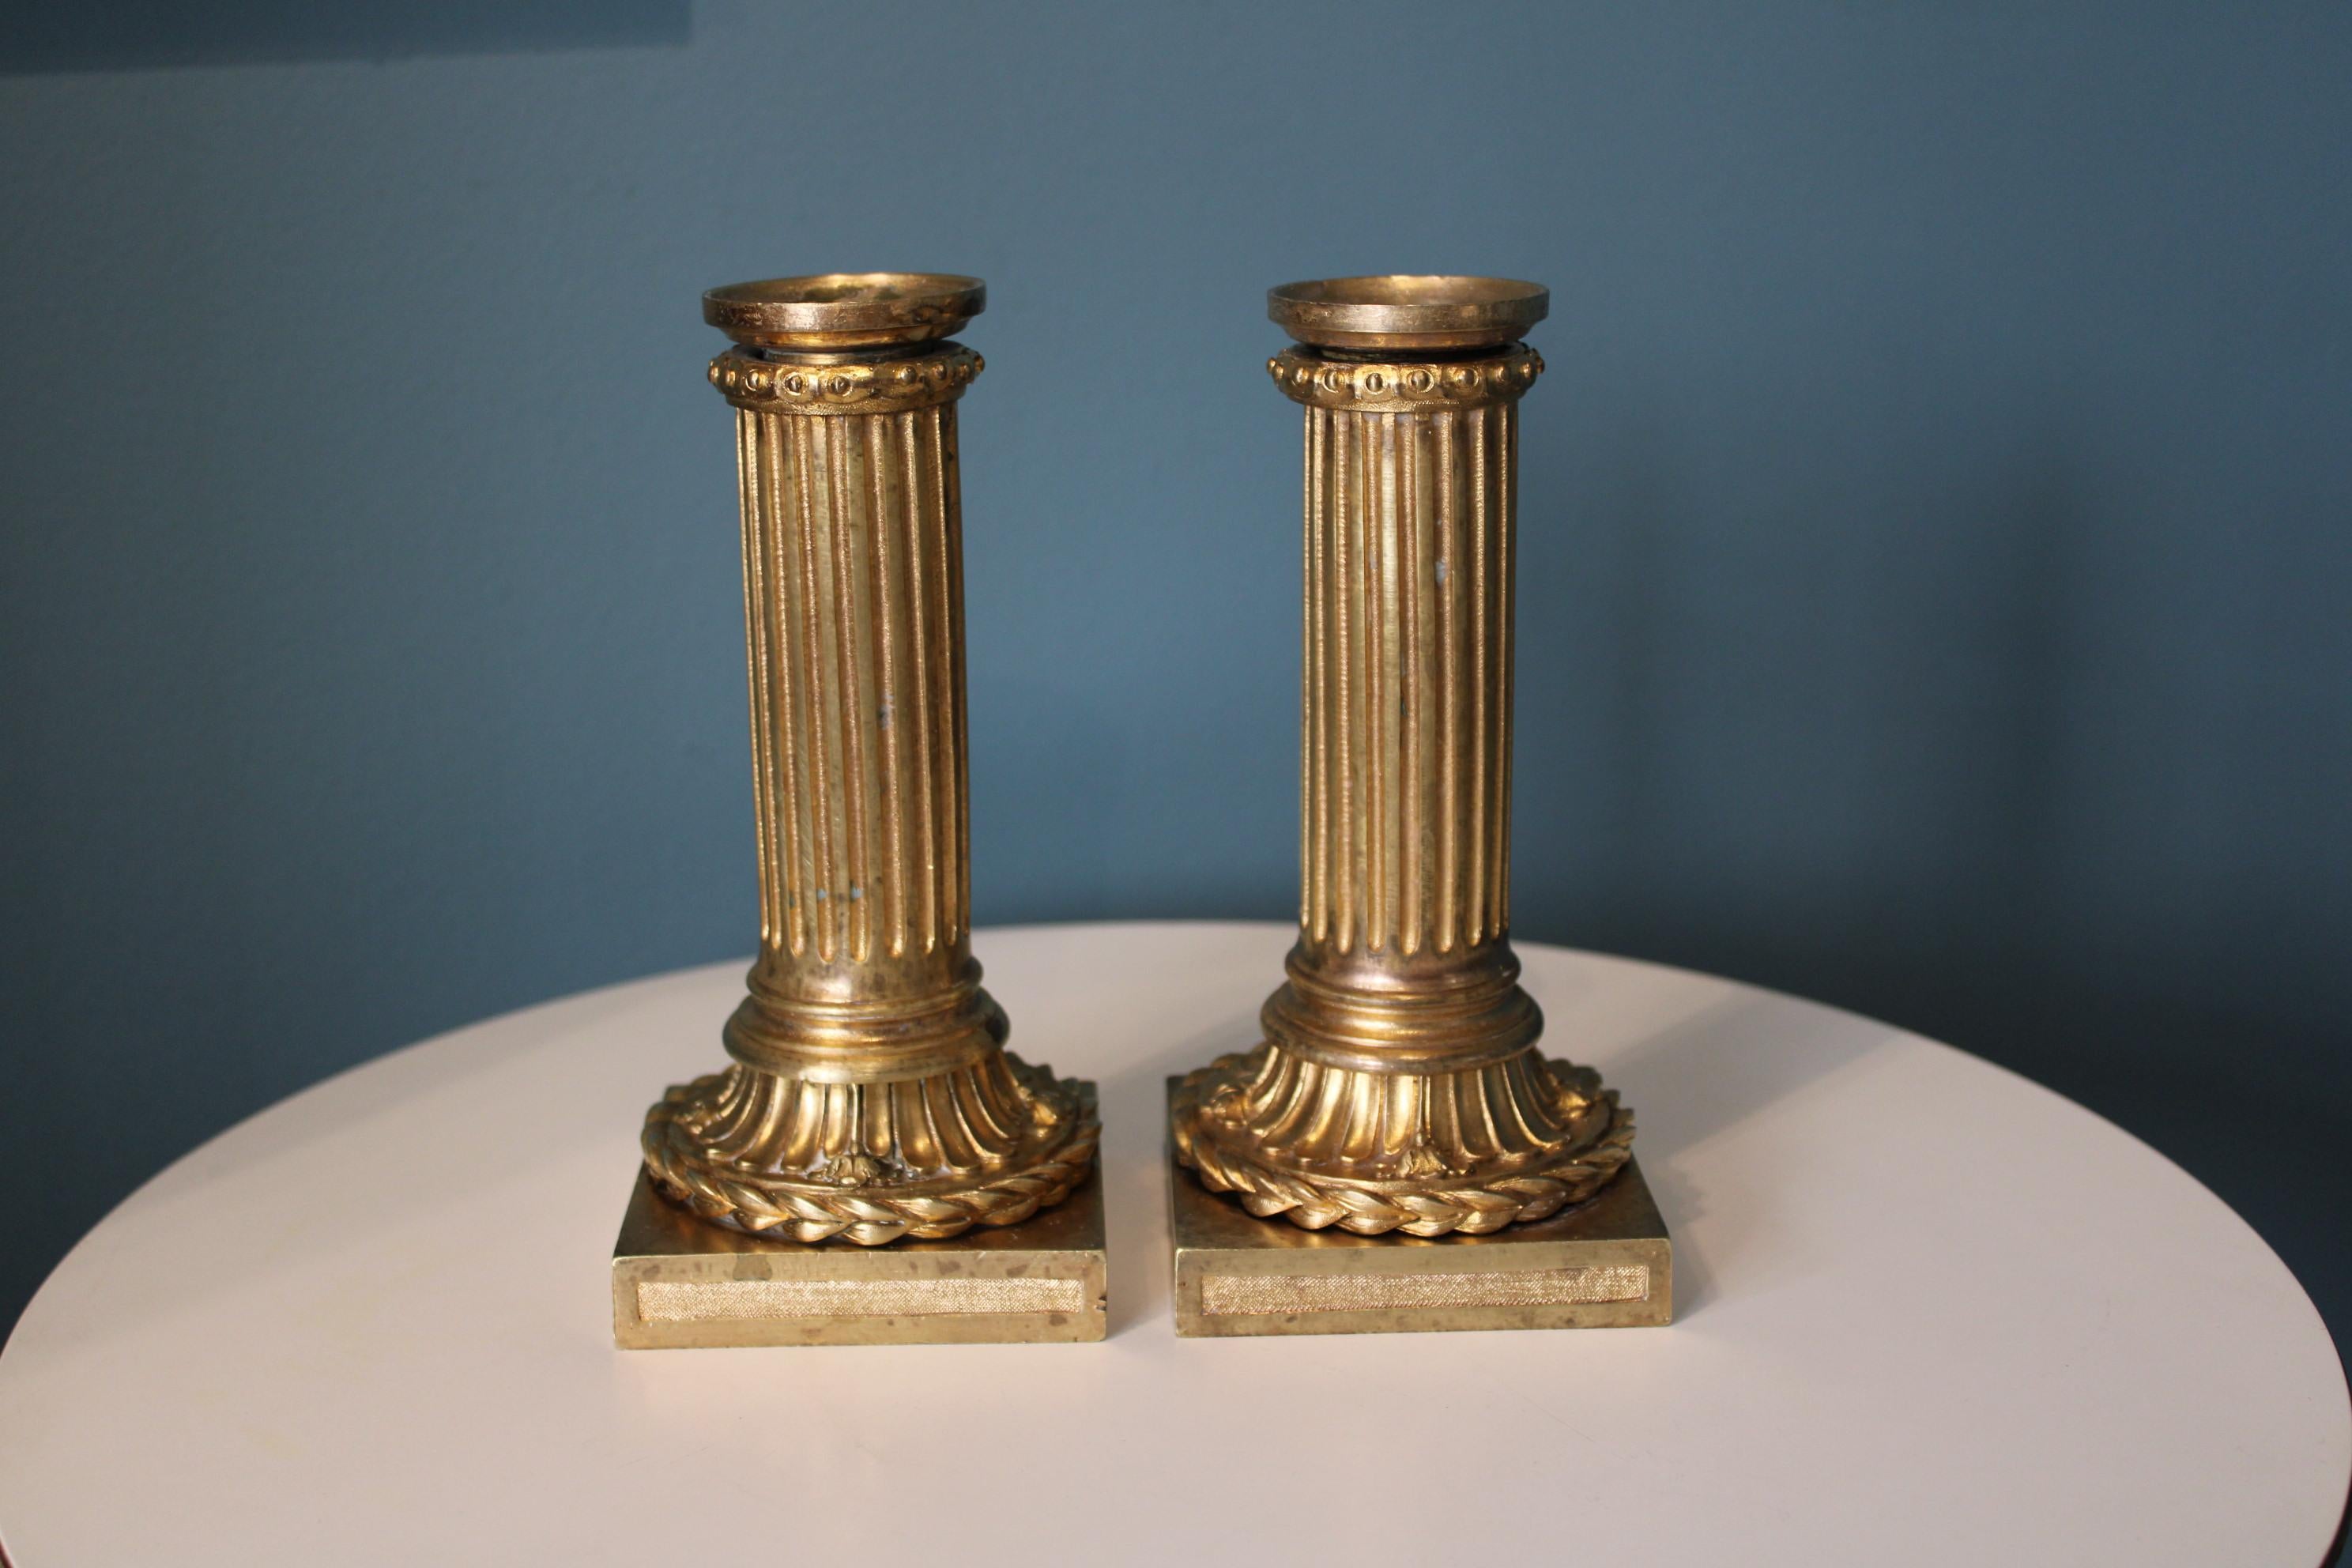 Chiseled gilt bronze candlesticks
19th century.